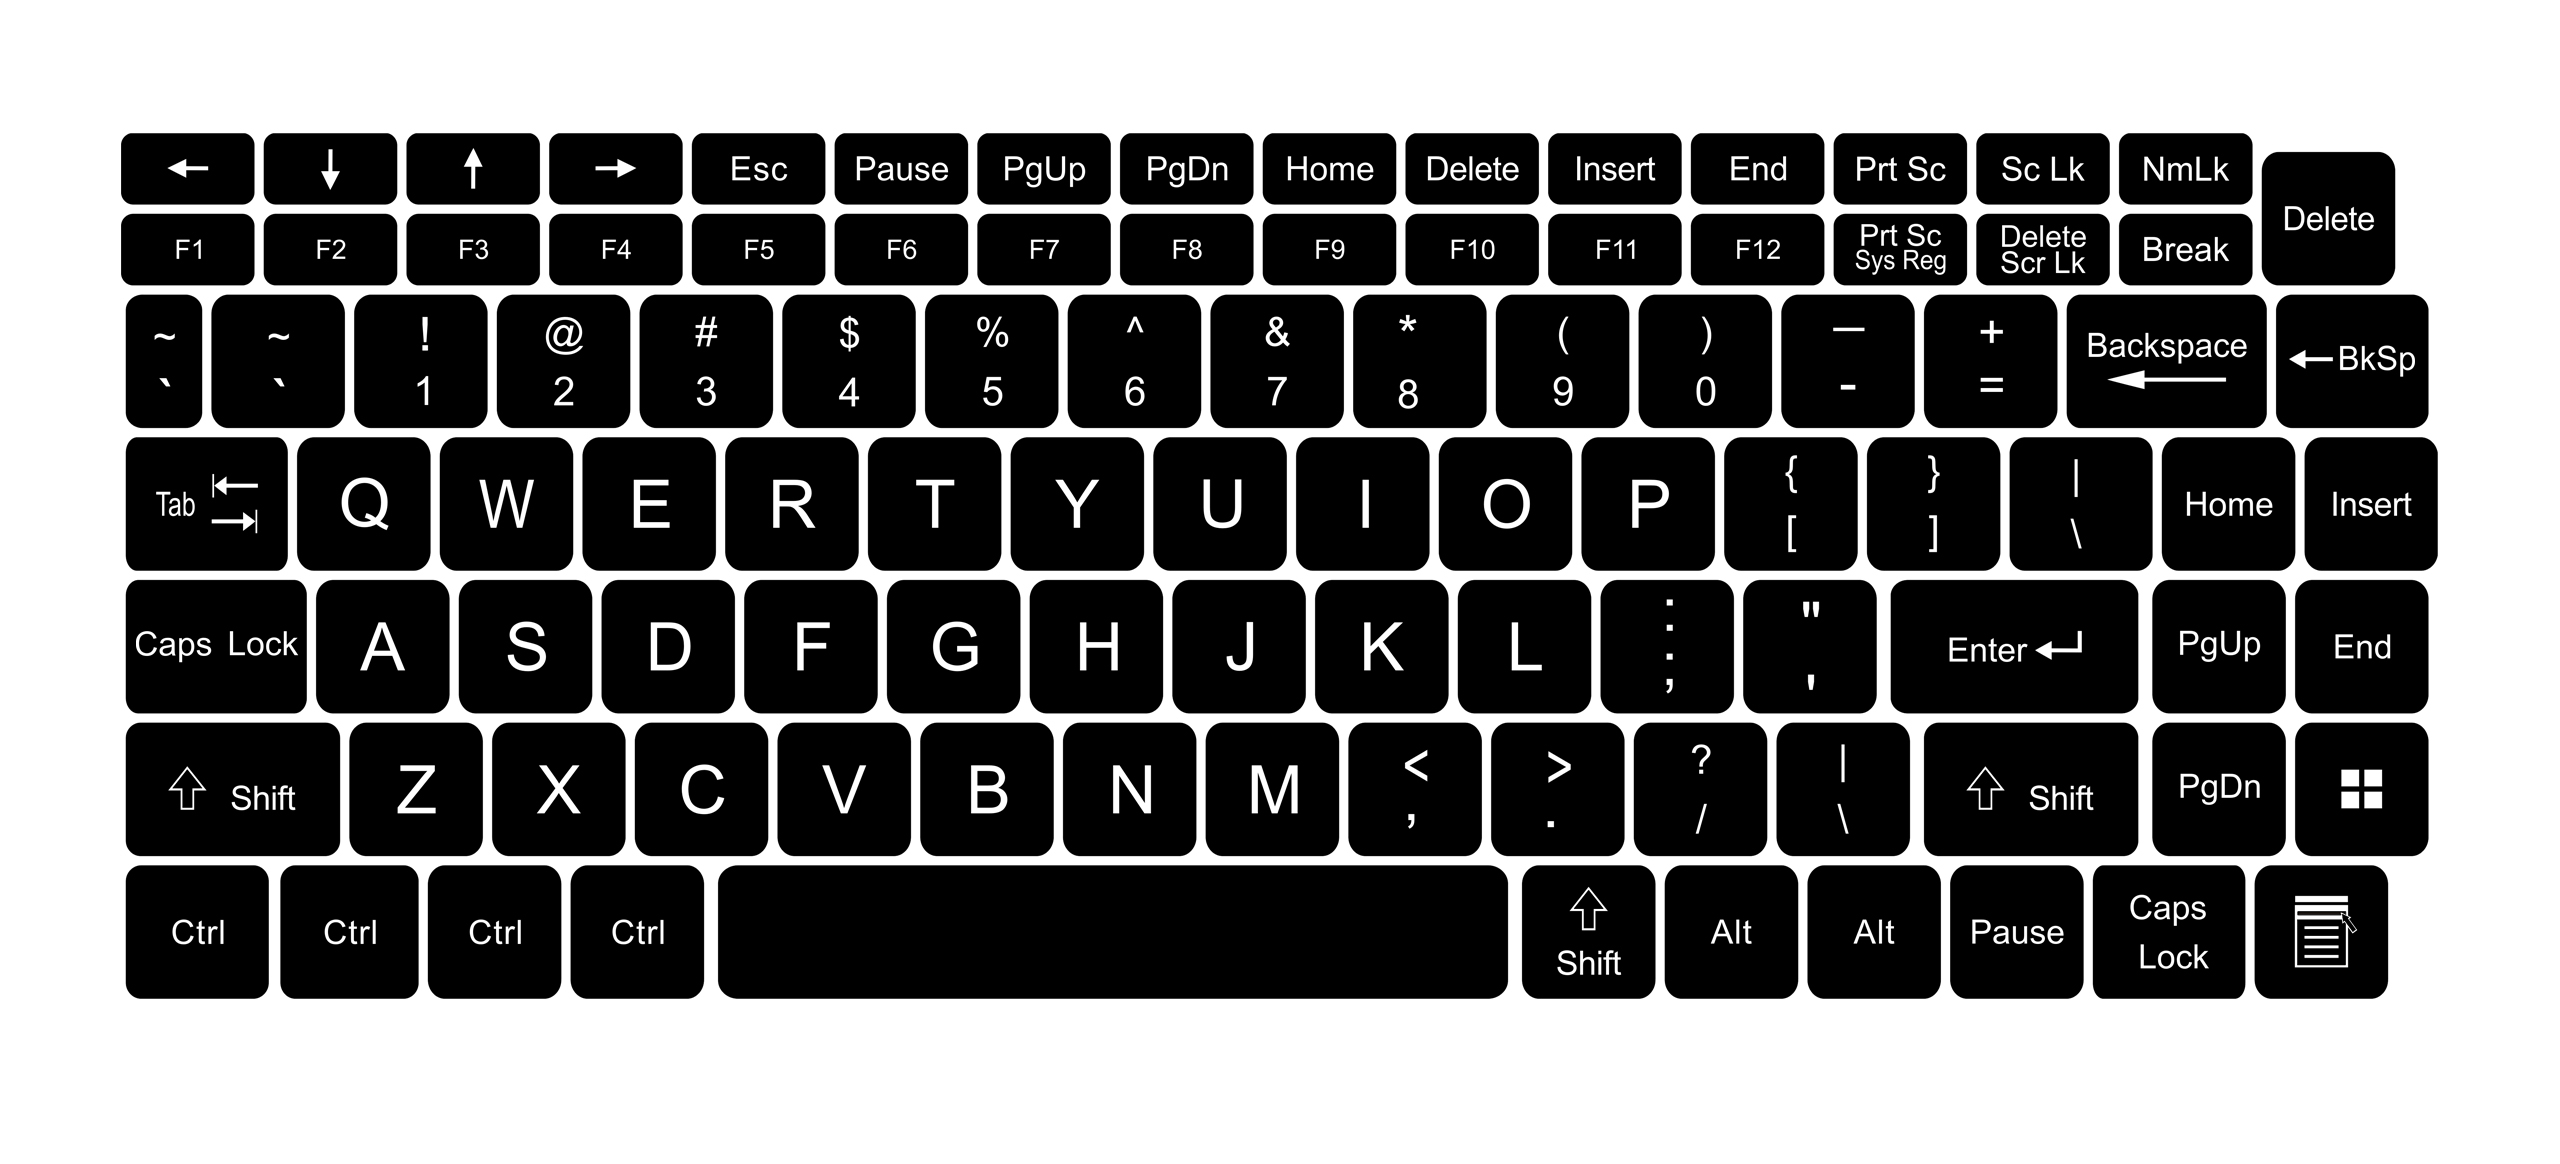 Буквы на экране ноутбука. Наклейки на клавиатуру ноутбука. Клавиатура буквы. Русские буквы на клавиатуру. Клавиатура компьютера наклейки.